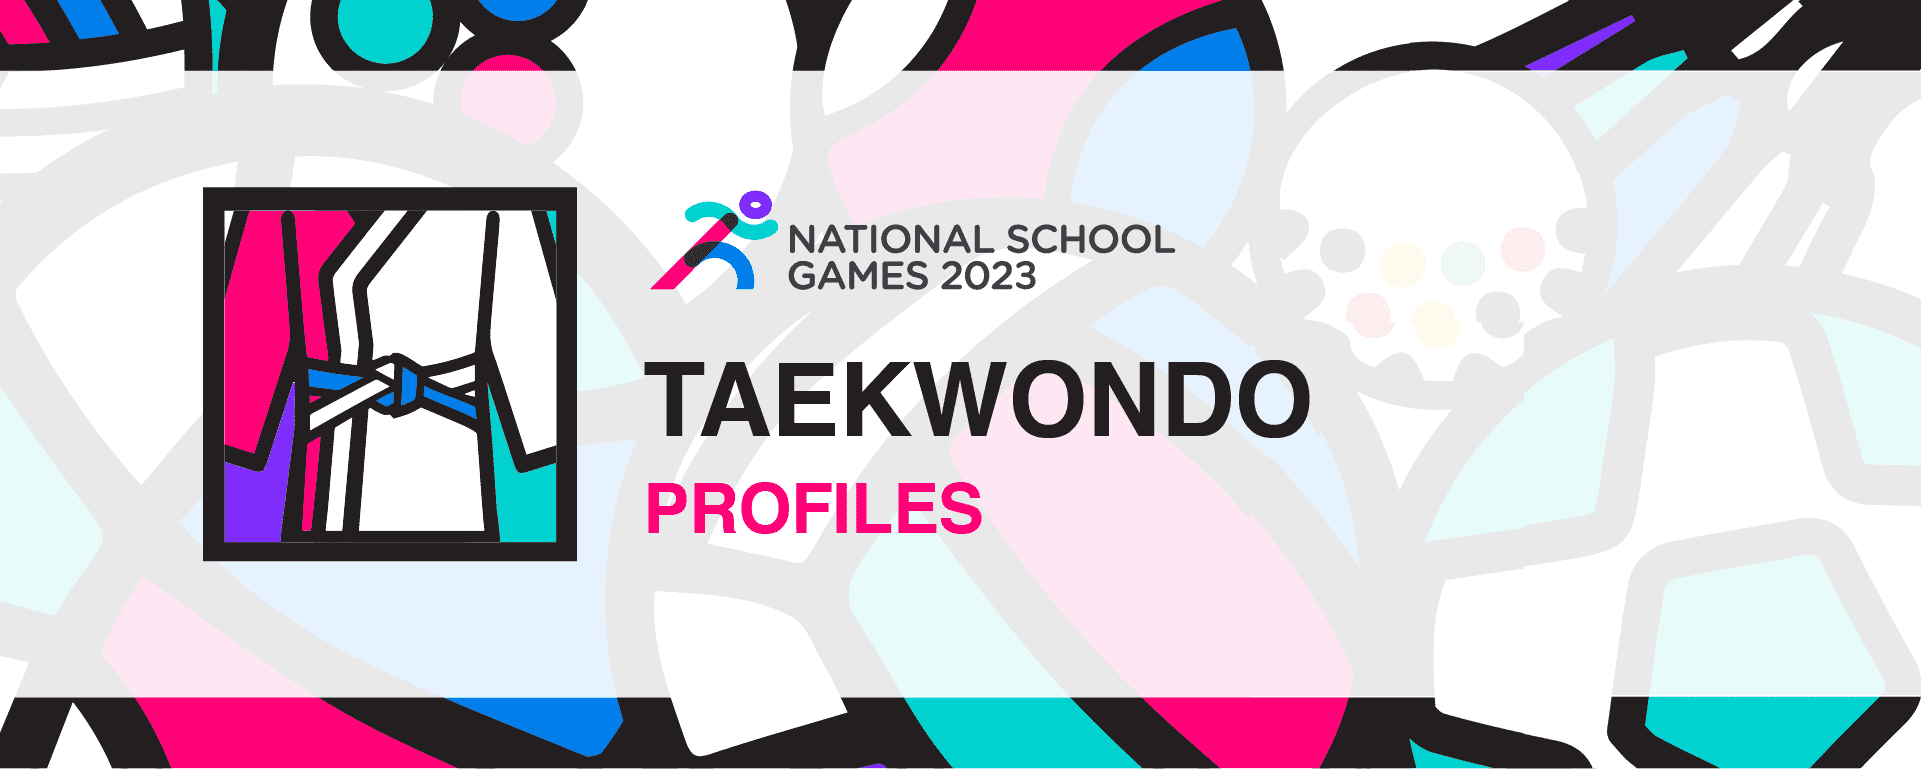 National School Games 2023 | Taekwondo | Profile